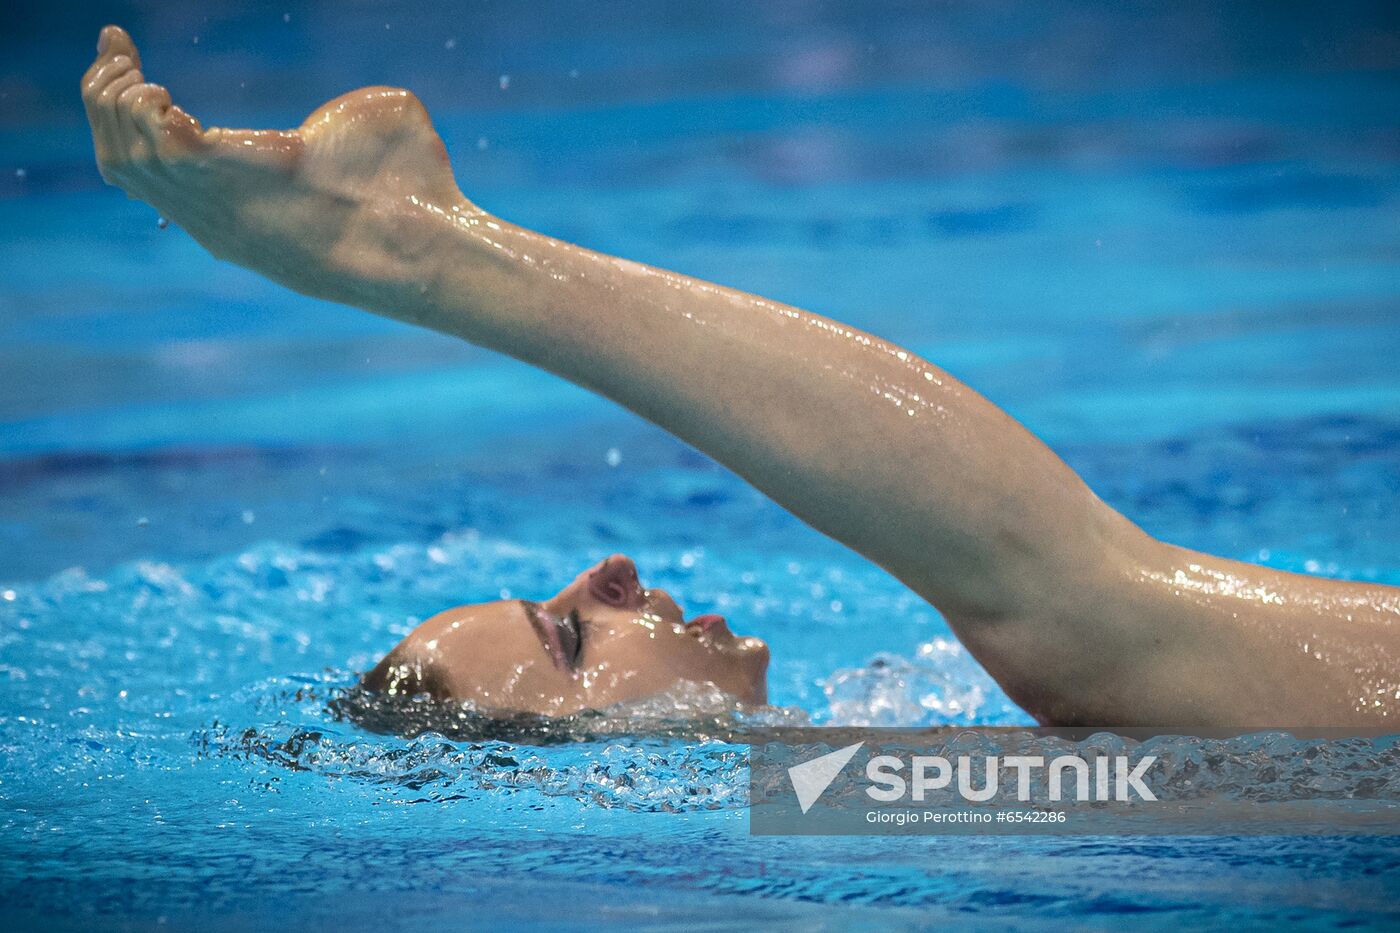 Hungary European Aquatics Championship Artistic Swimming Solo